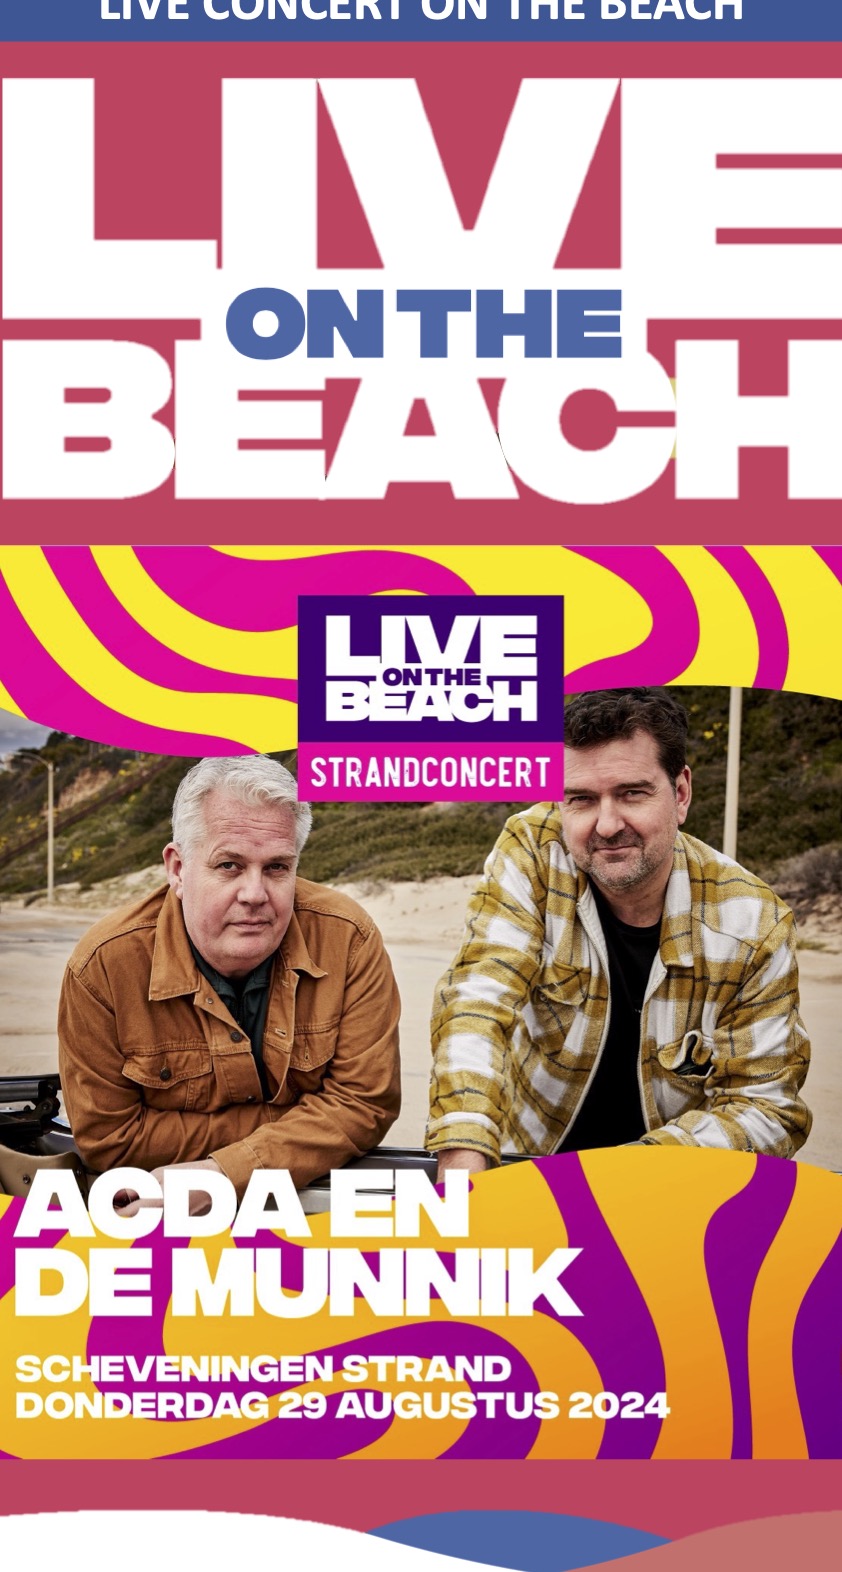 StrandConcert Acda en de Munnik 29 augustus Scheveningen Live on the Beach 29 augustus 2024